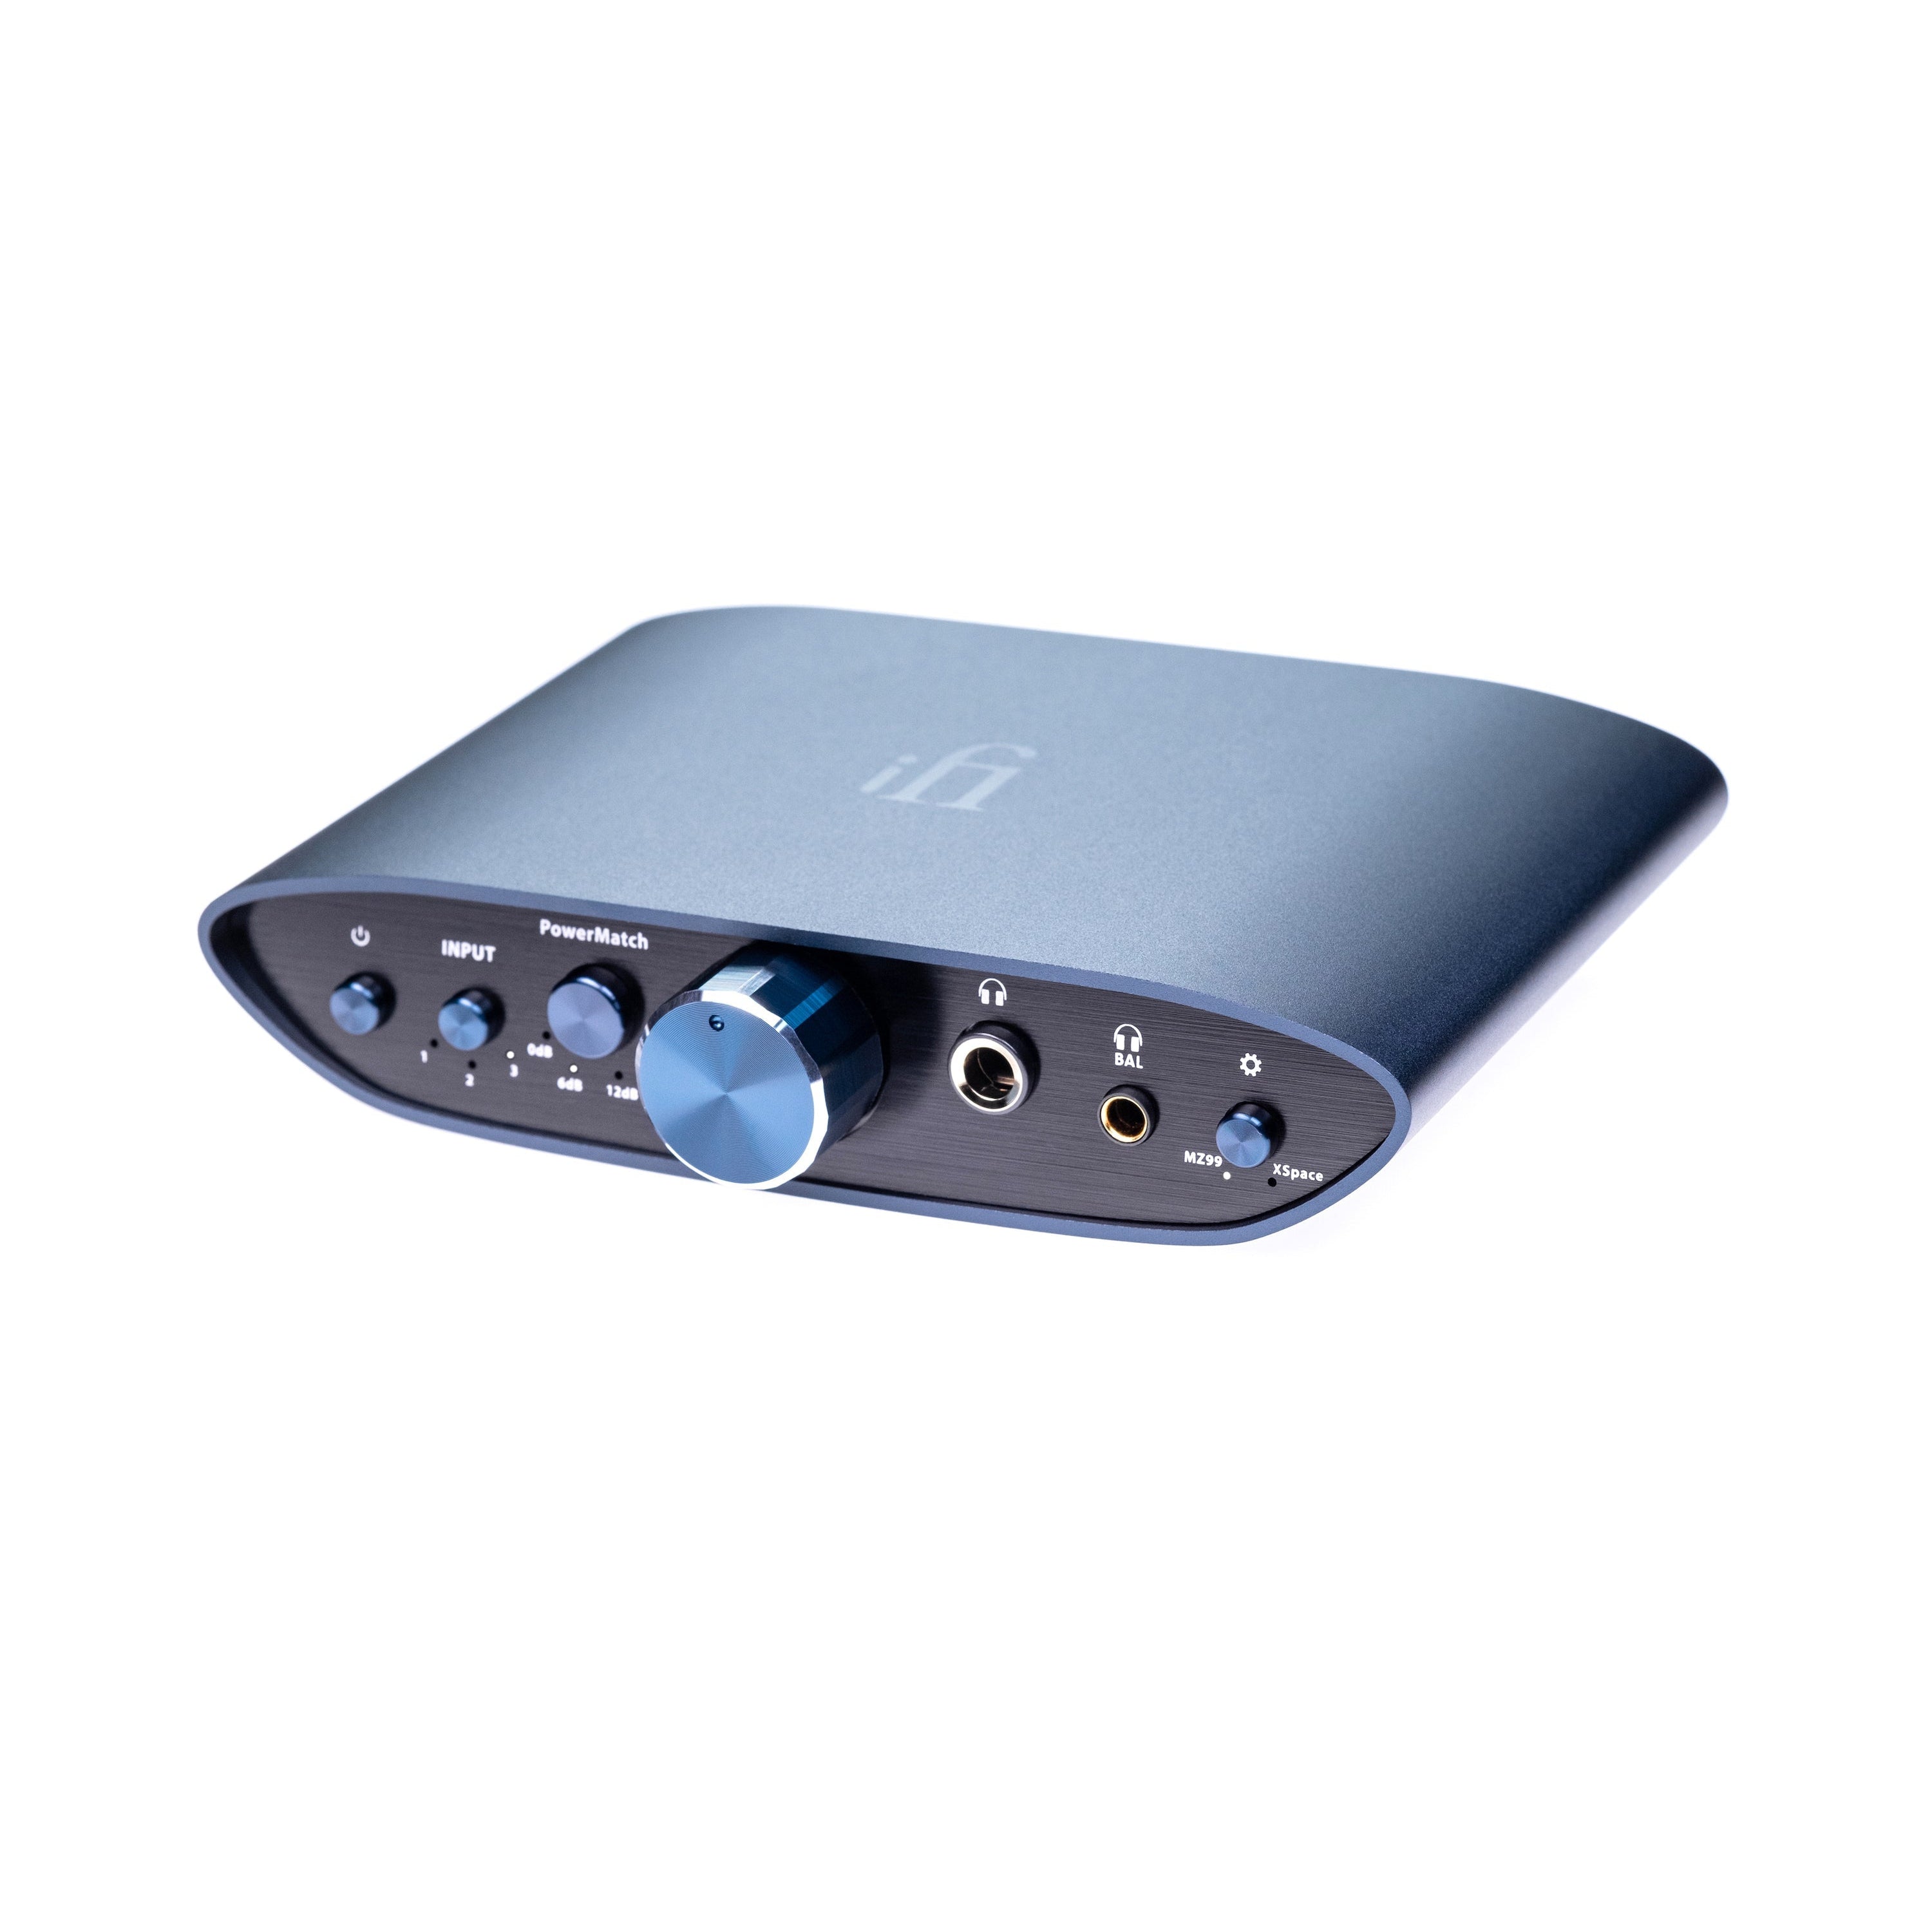 iFi ZEN CAN Signature MZ99 | Desktop Headphone Amplifier